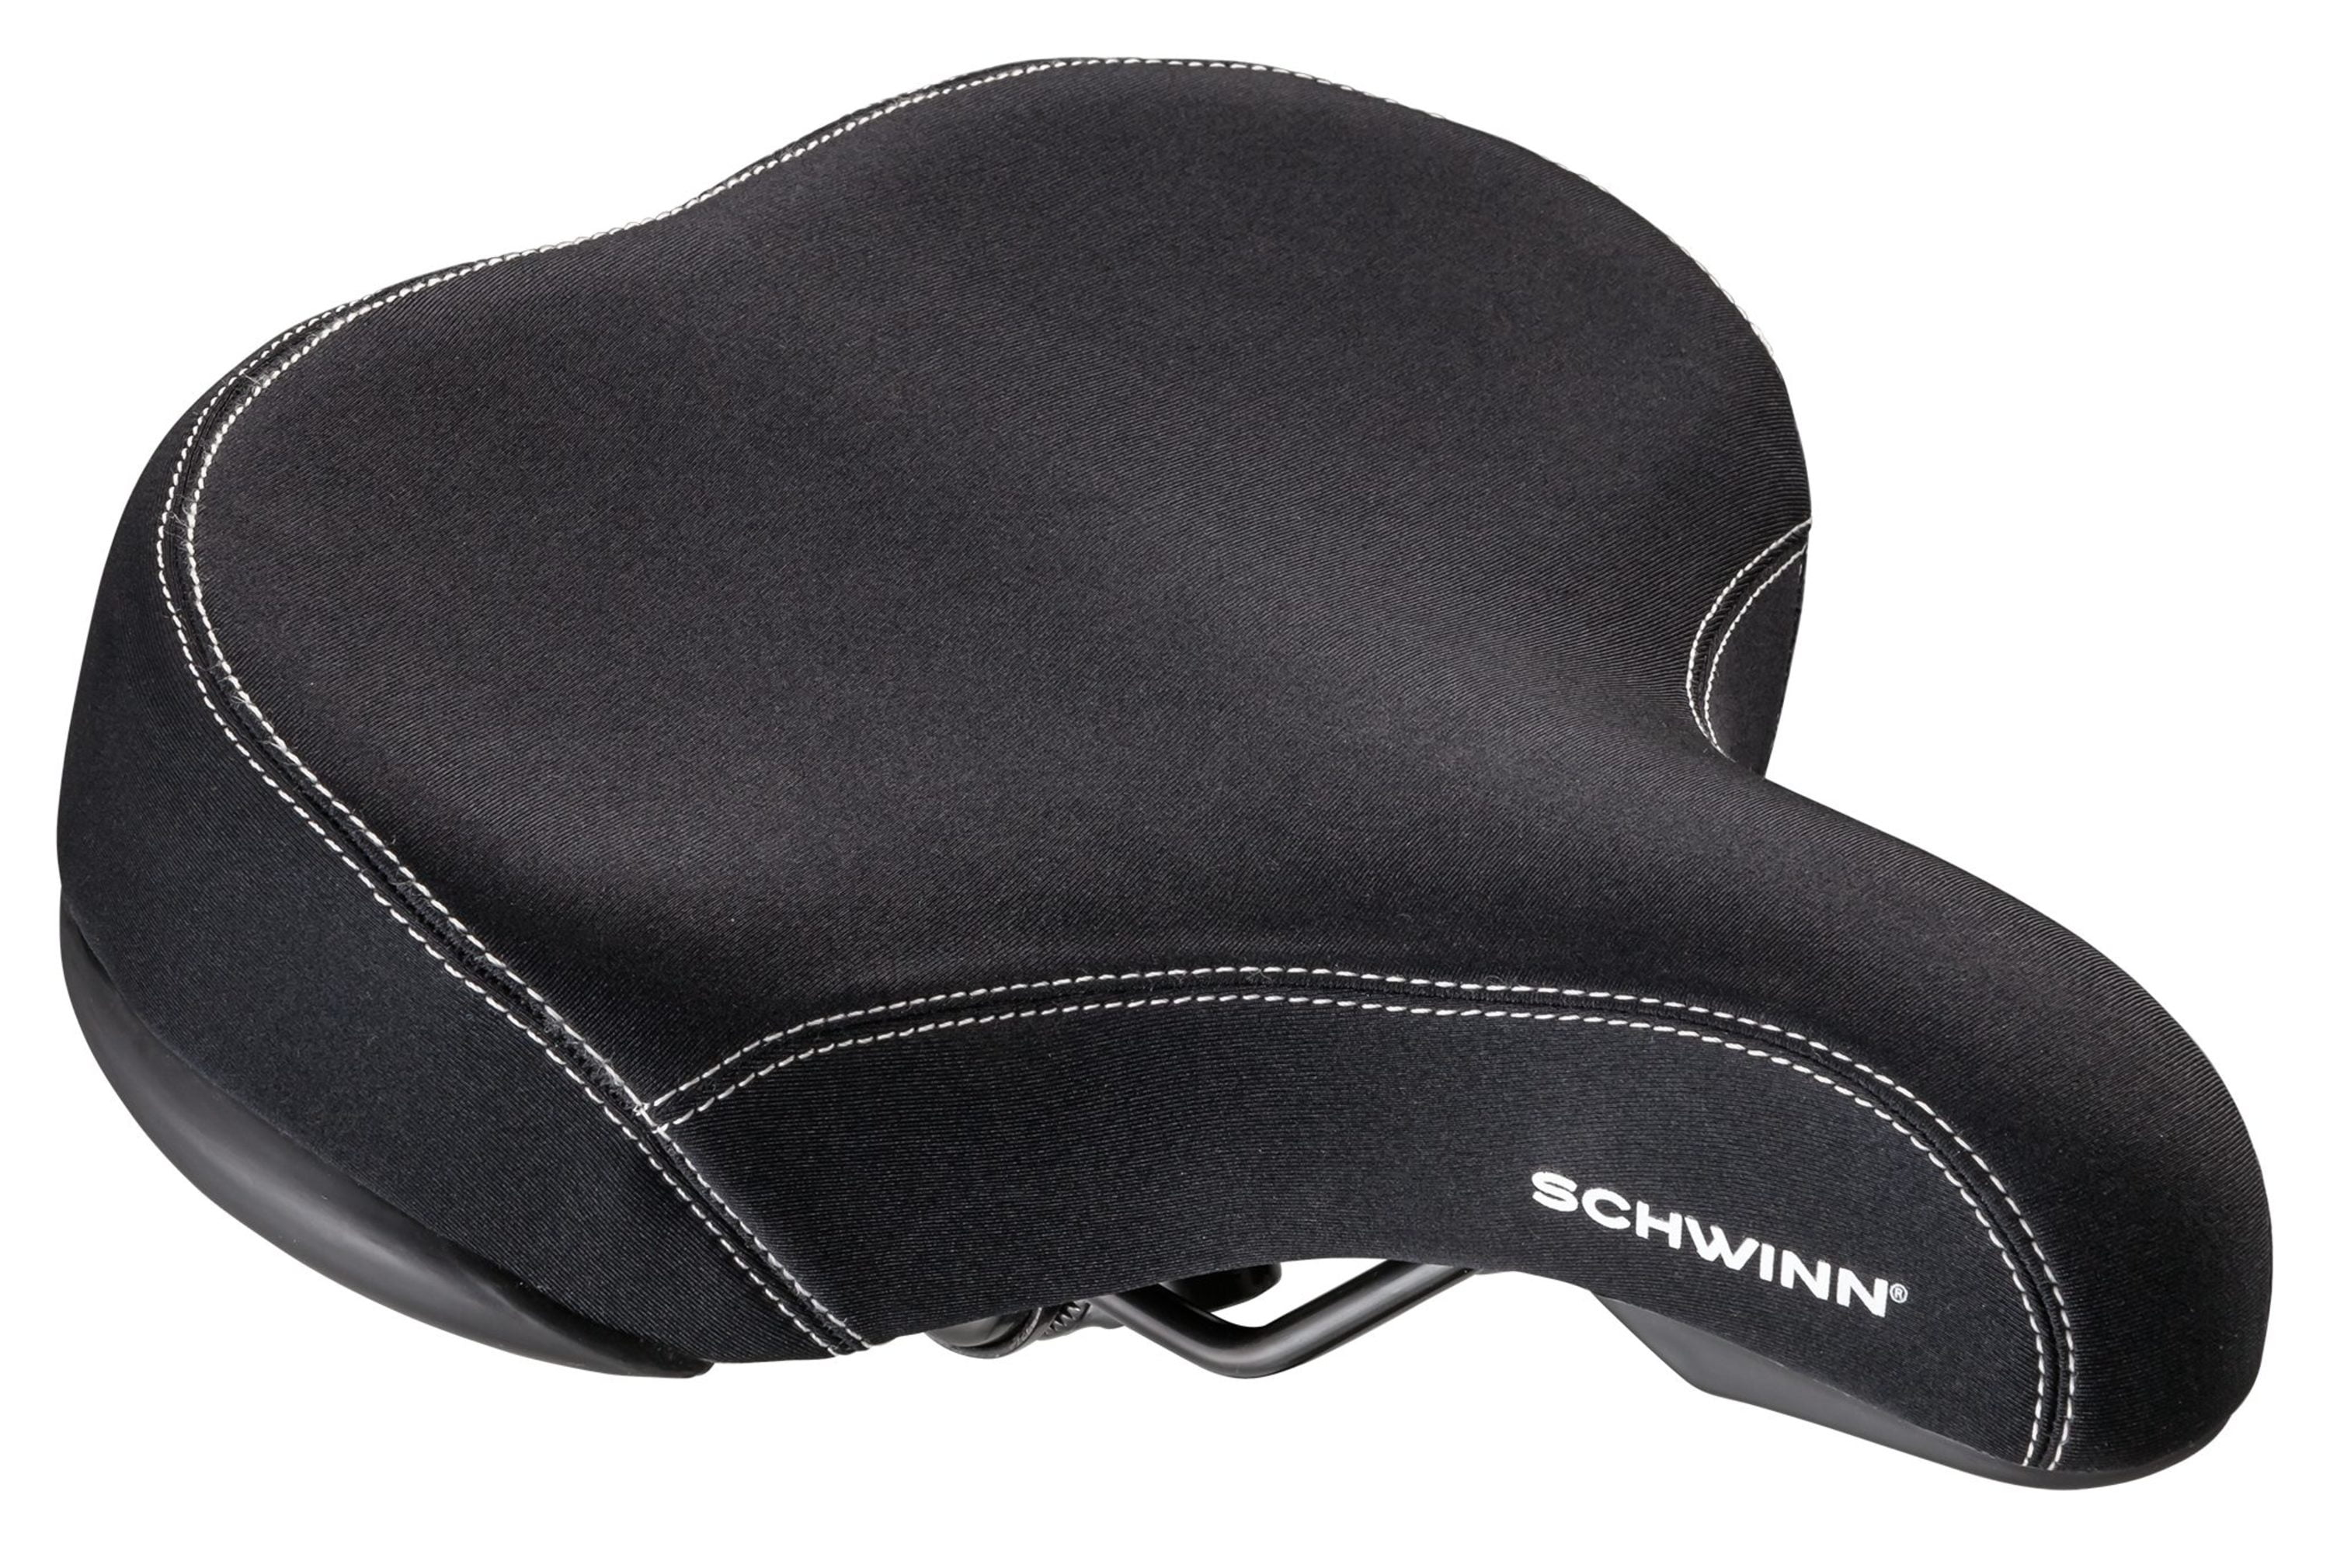 Schwinn No Pressure Bicycle Bike Seat Comfortable Ergonomic Soft Wide Large 